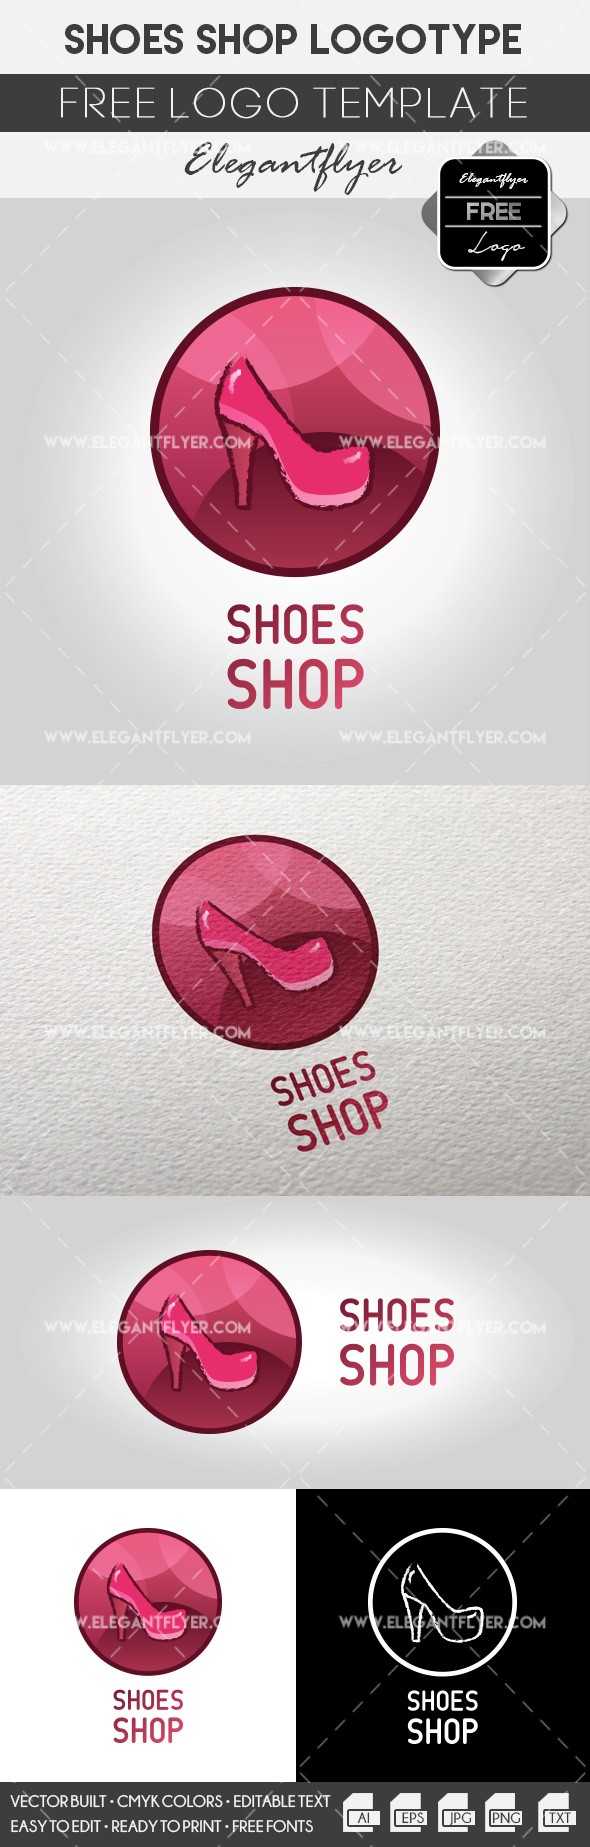 Shoes shop by ElegantFlyer